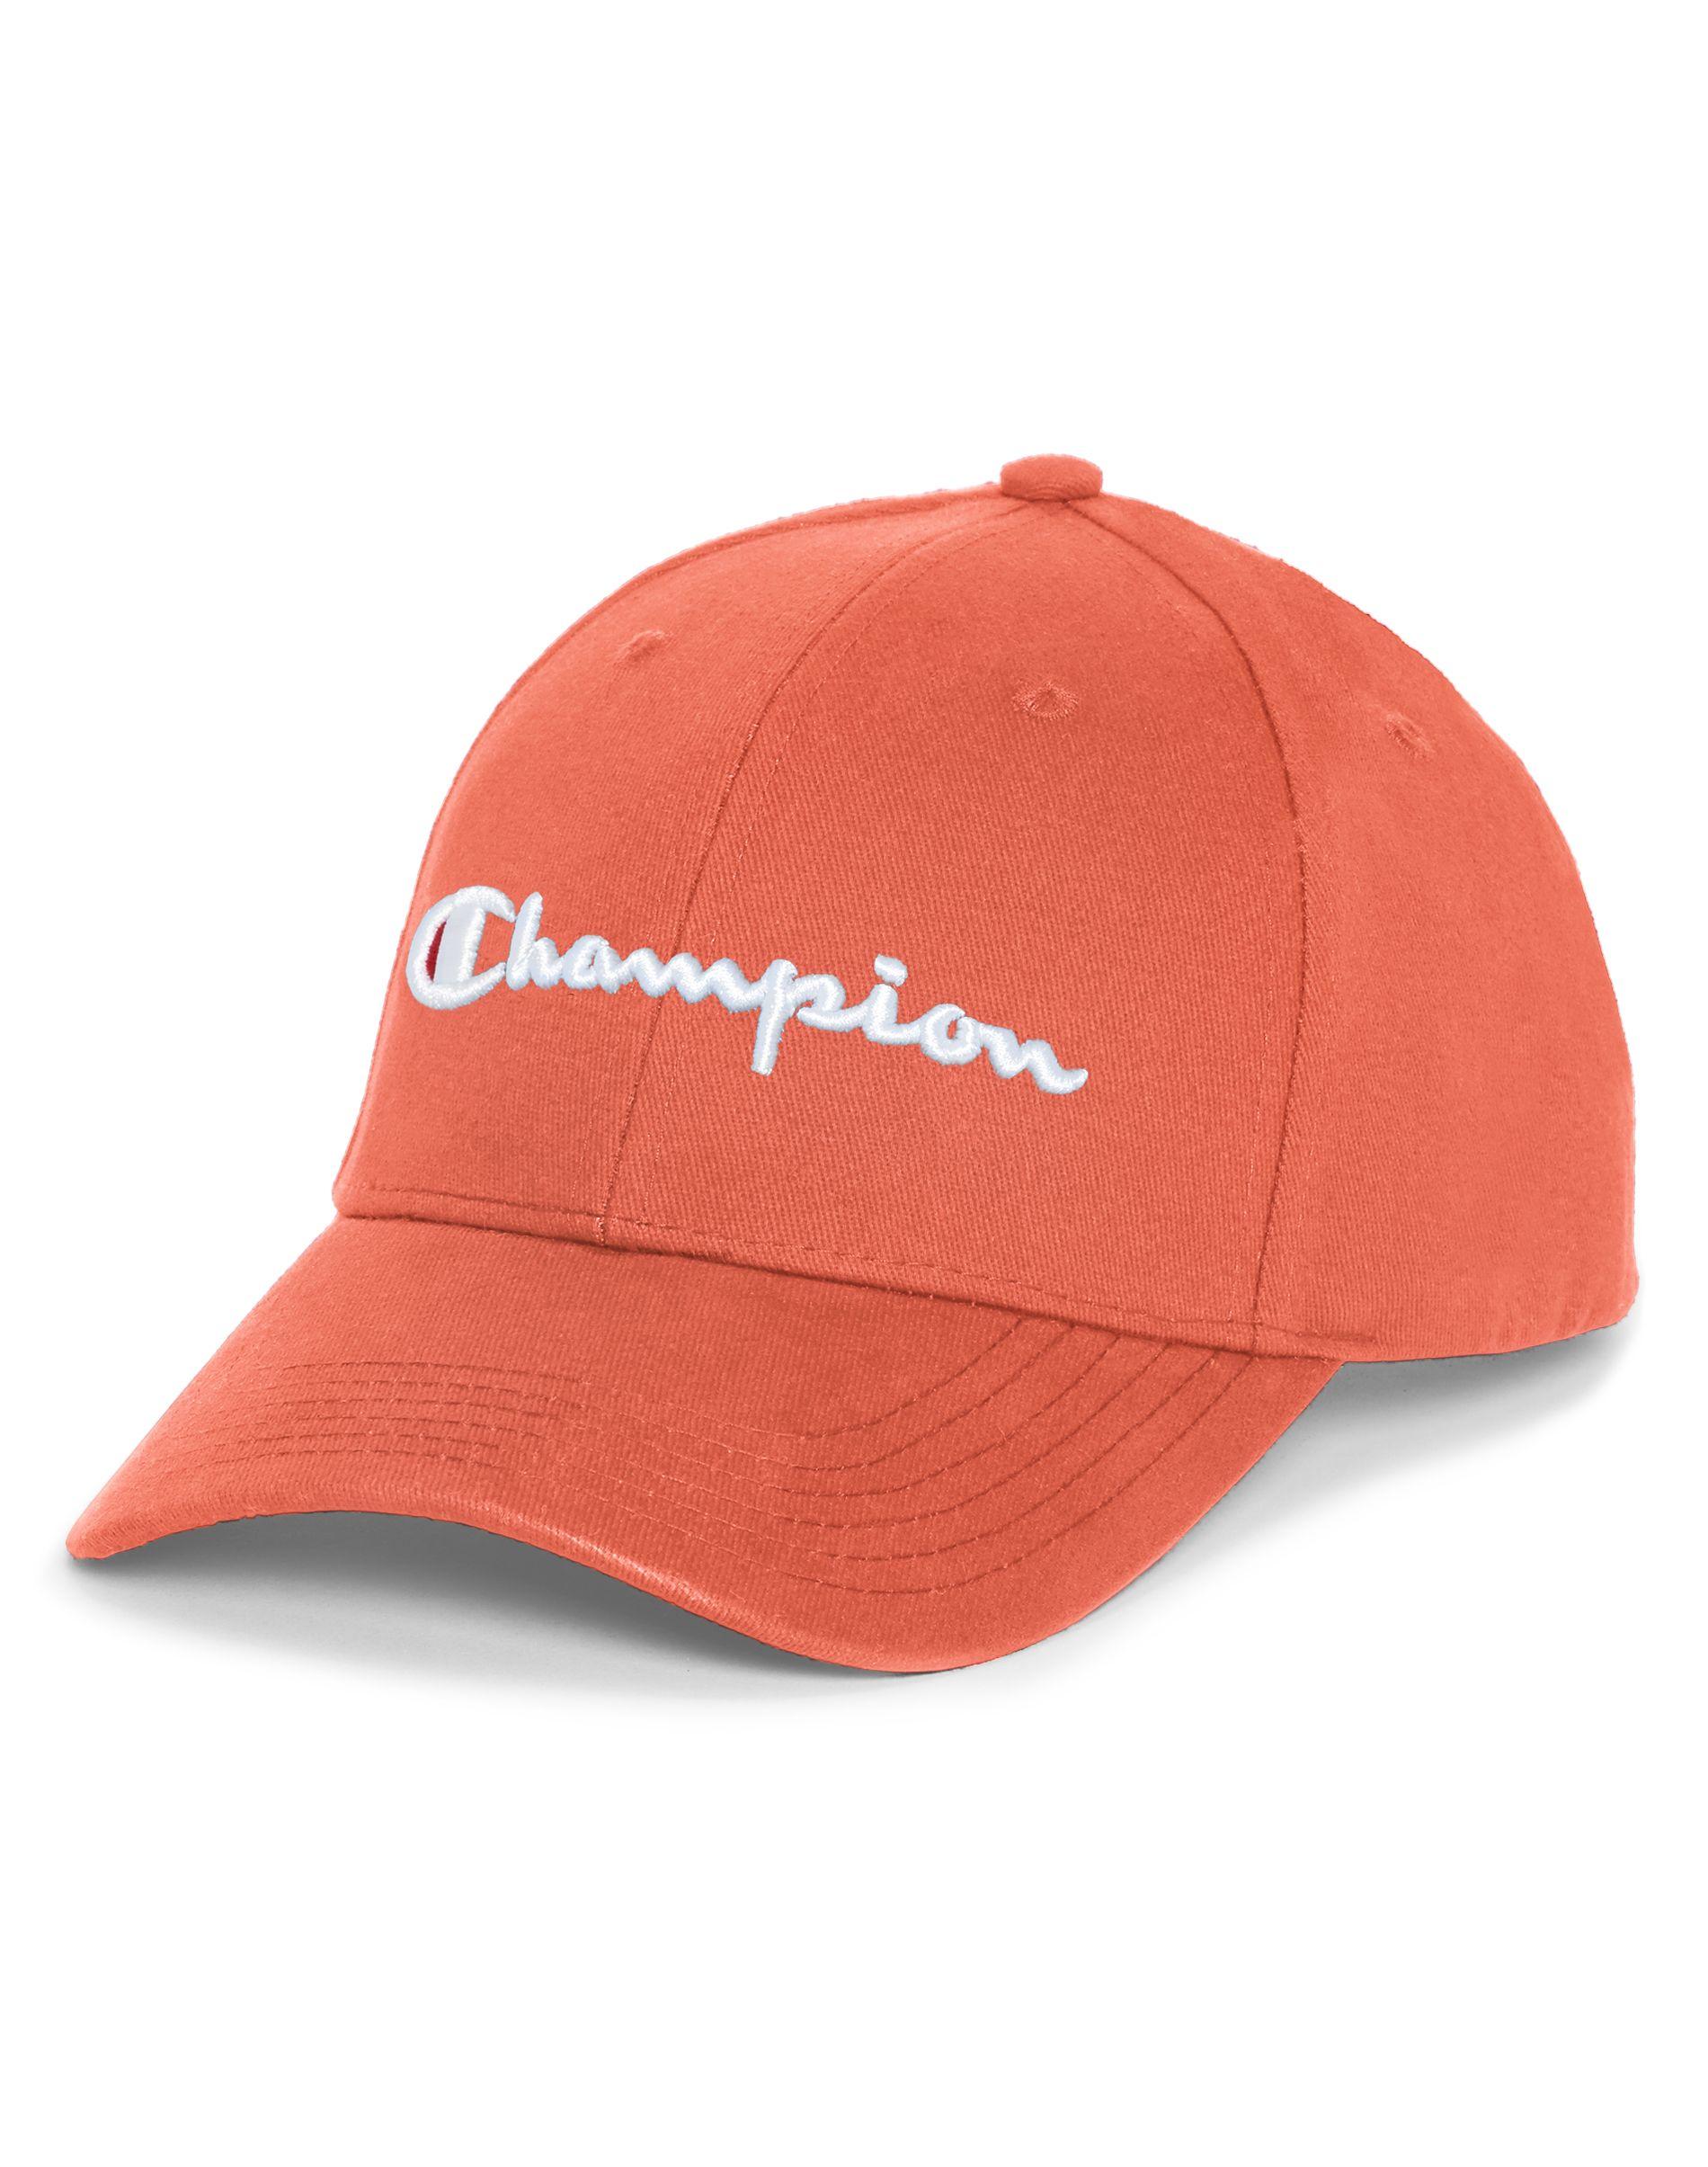 champion twill cap